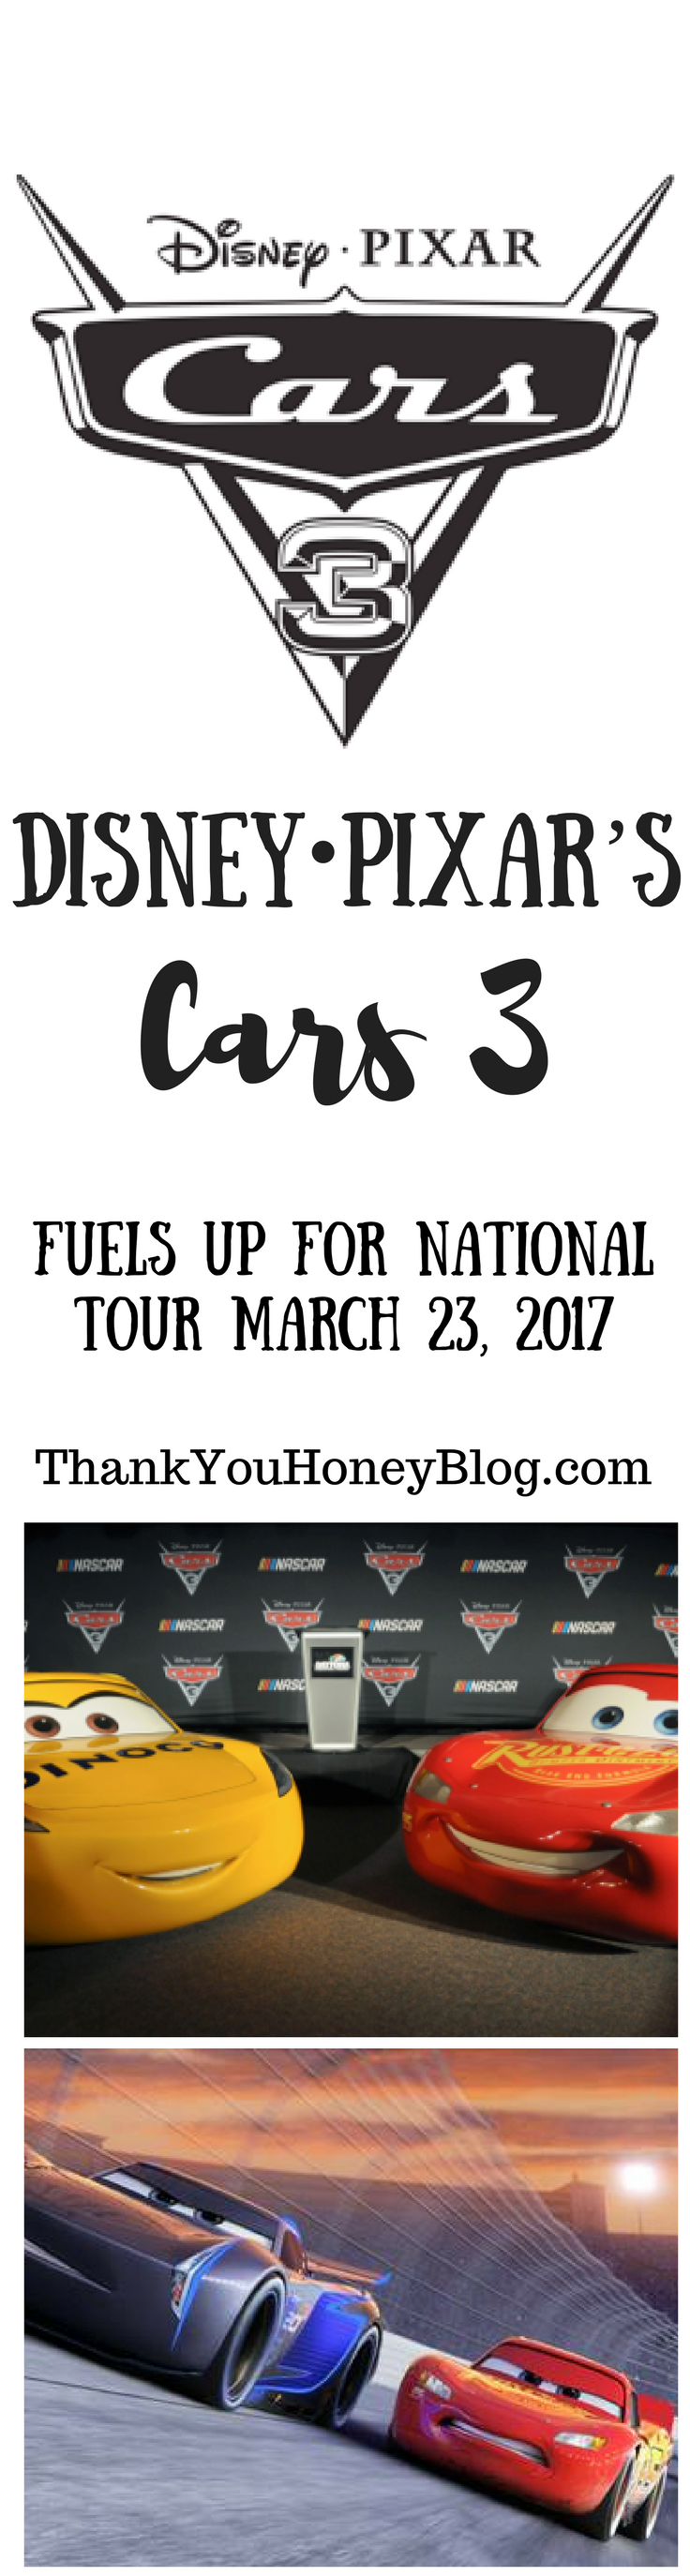 DISNEY·PIXAR’S “CARS 3” Fuels Up for Nationwide Tour